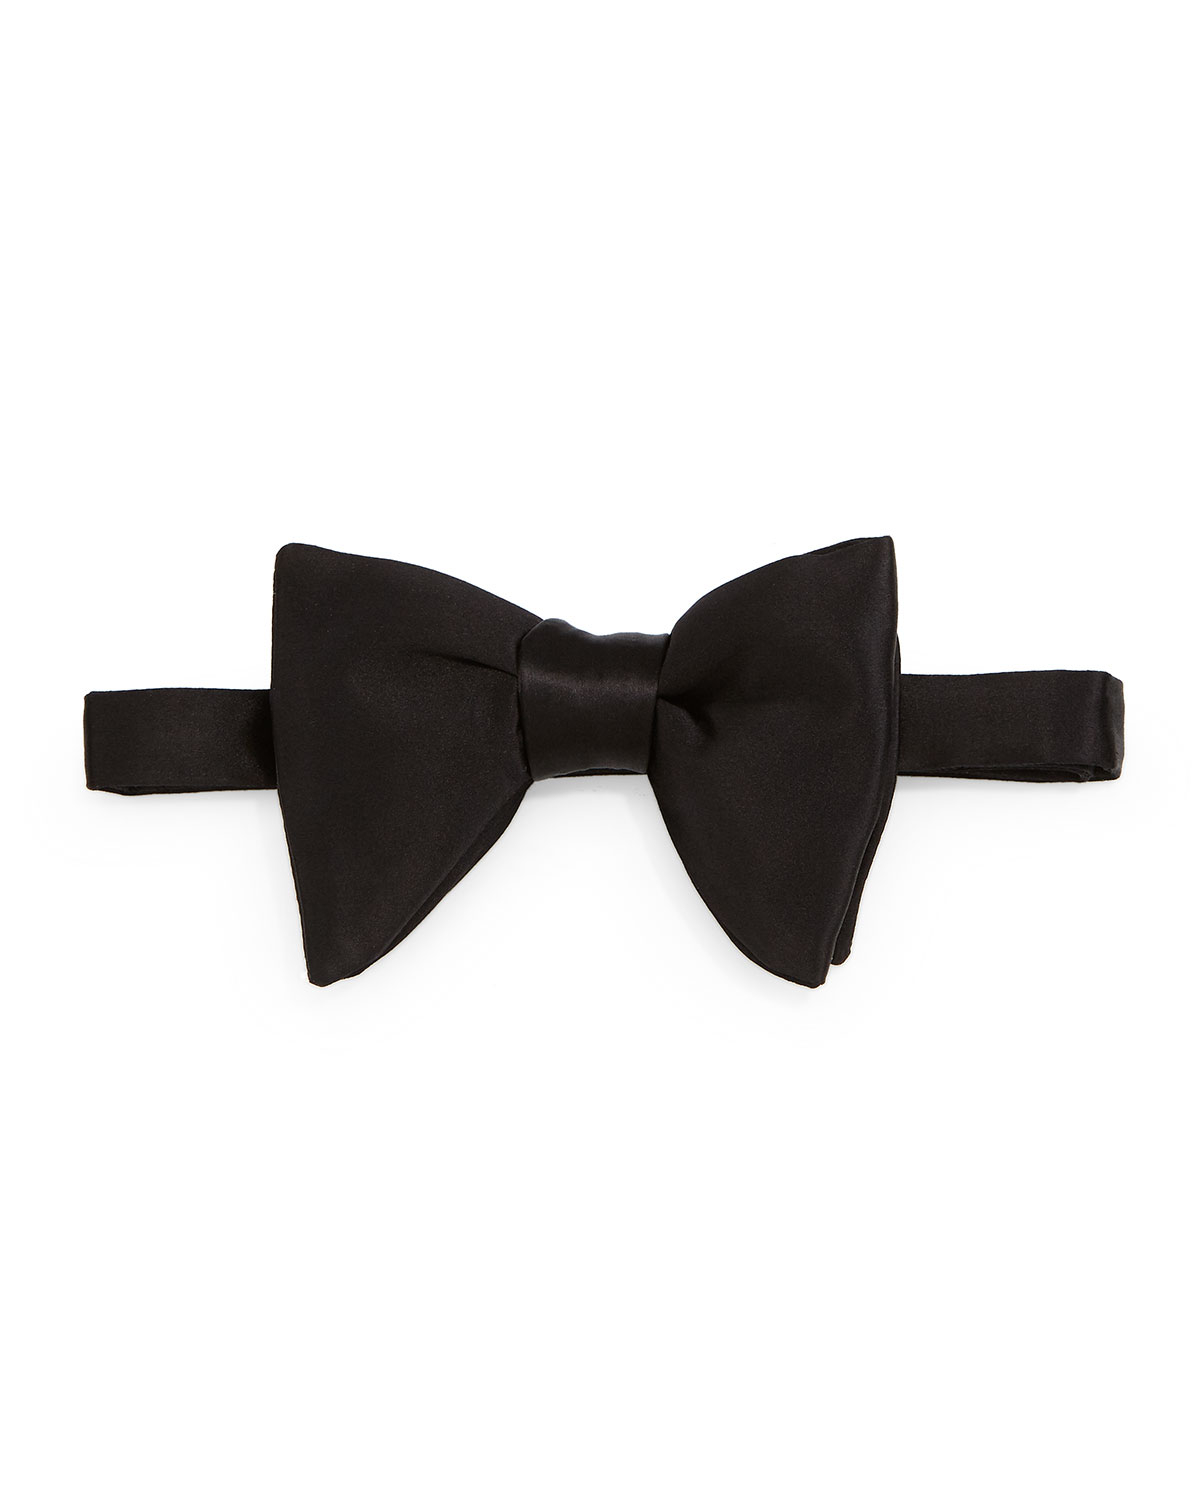 Tom ford black satin bow tie #7